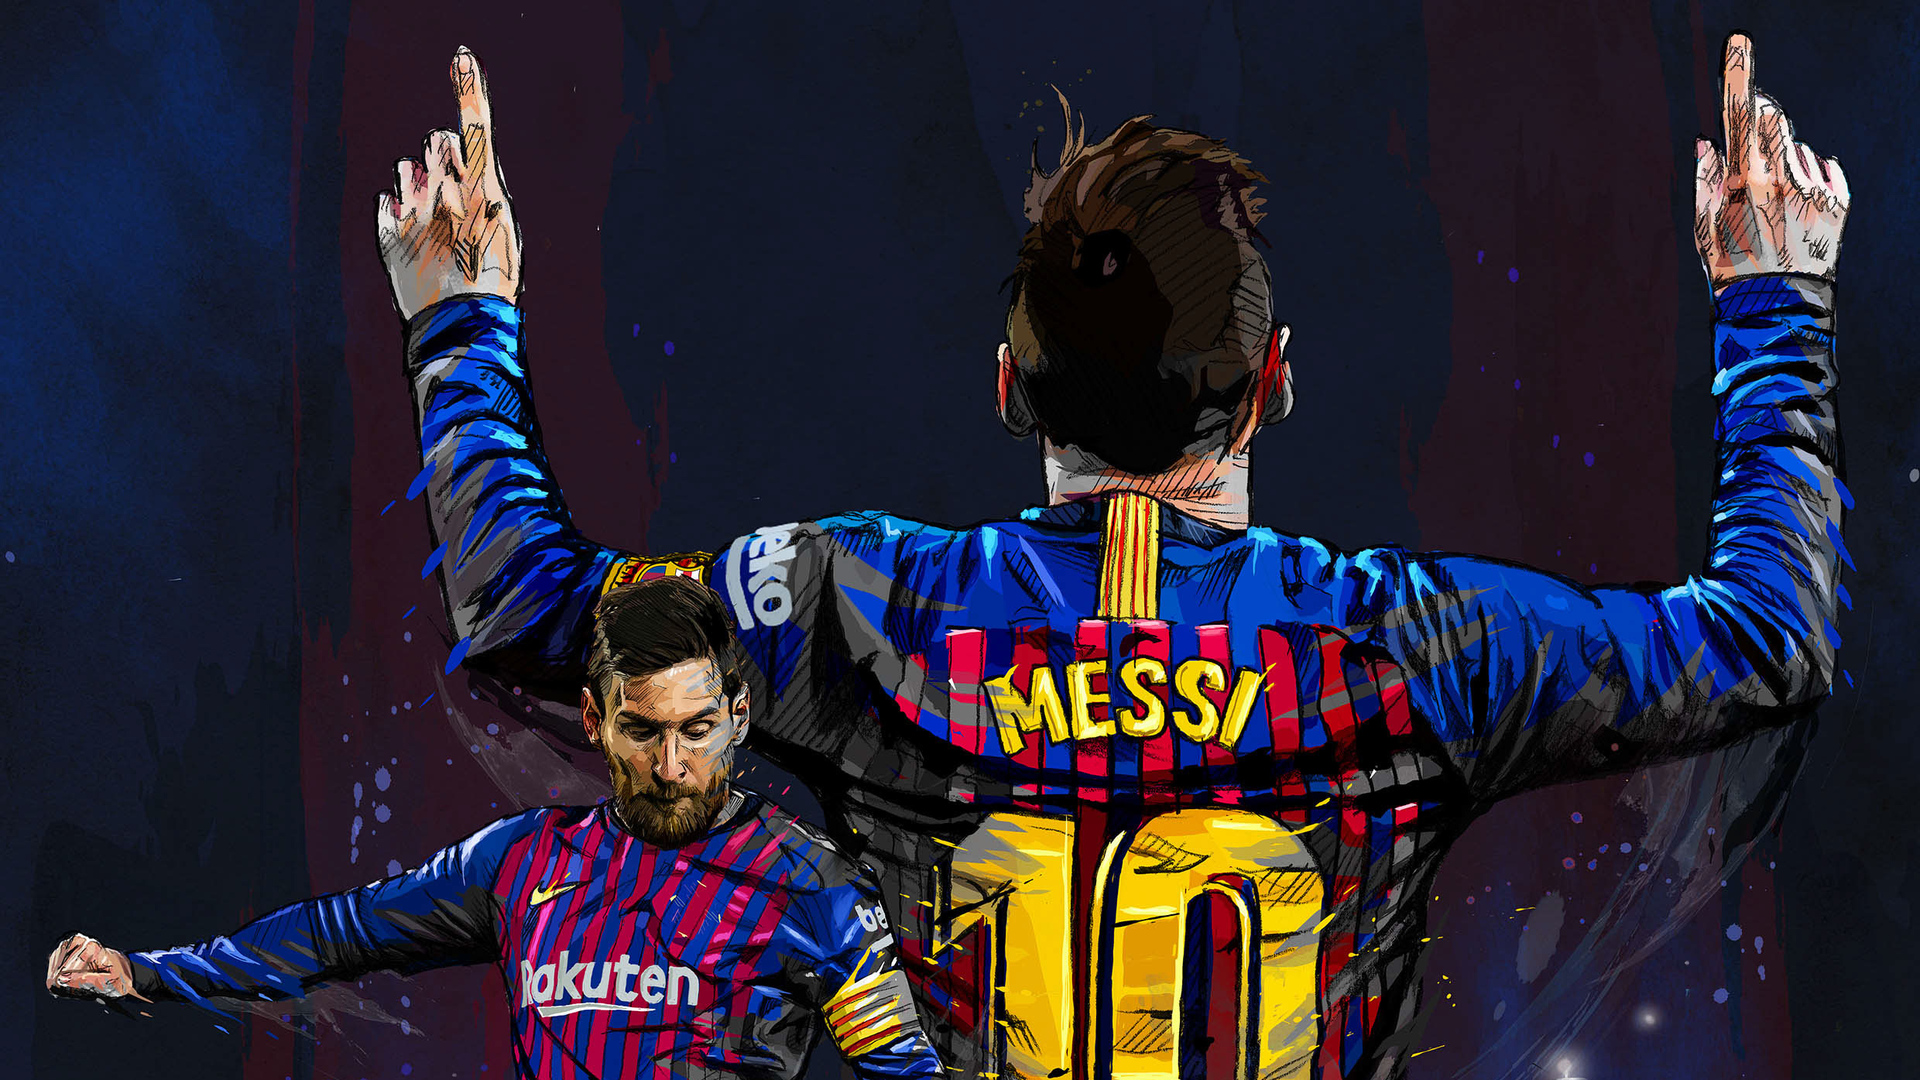 Messi Wallpaper 4K